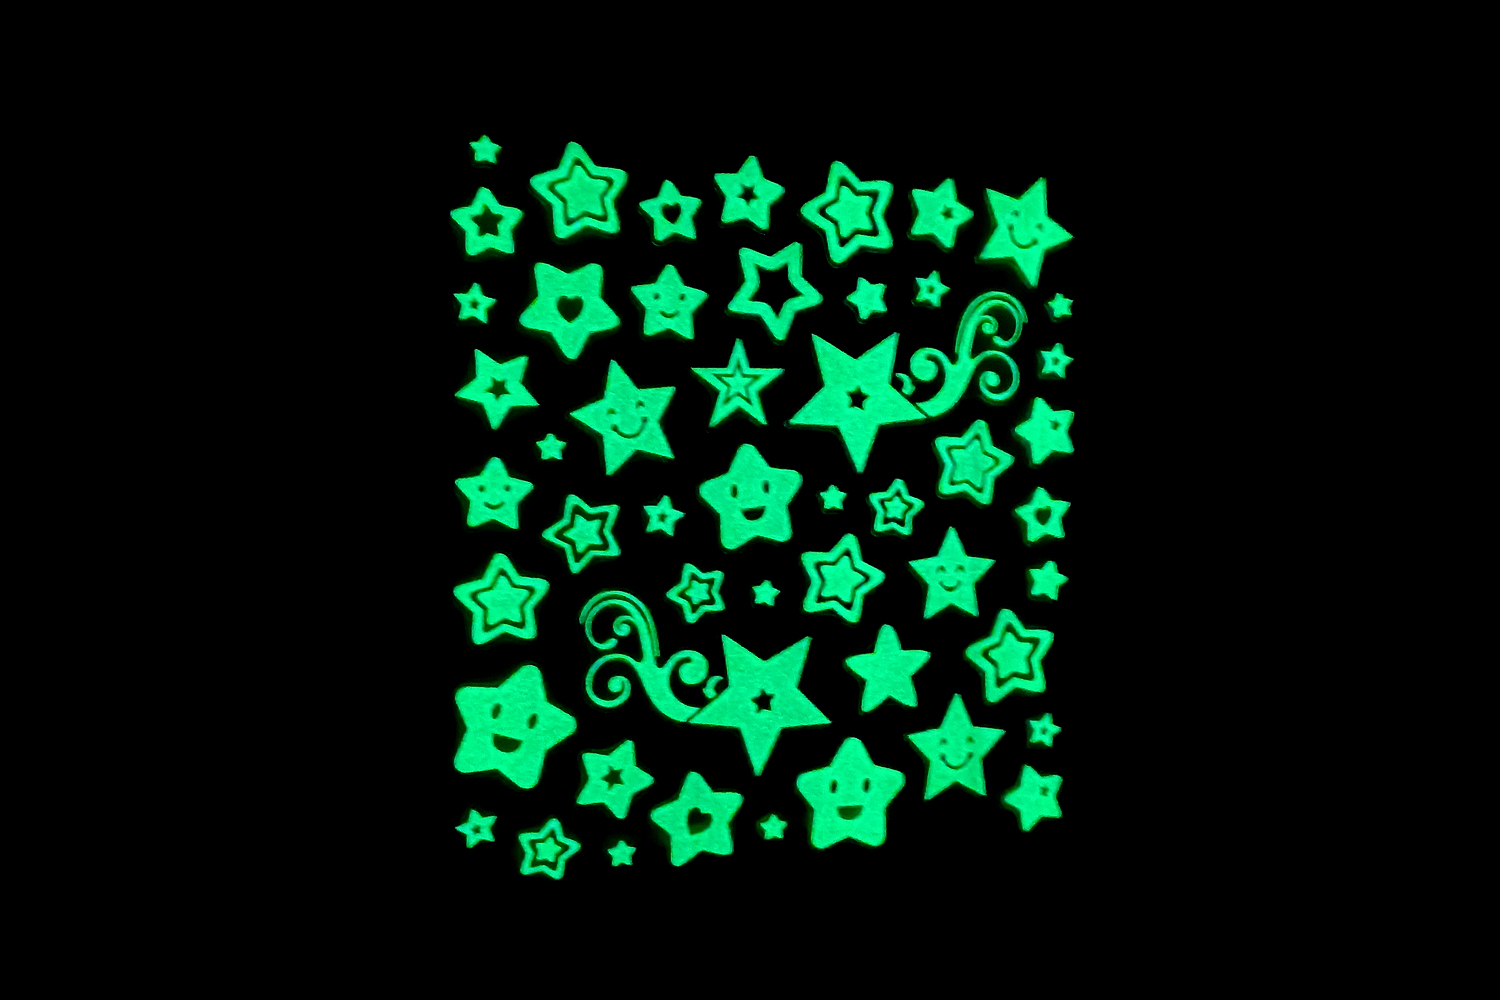 Sticker étoiles phosphorescentes pas cher - Stickers Phosphorescents  discount - stickers muraux - madeco-stickers